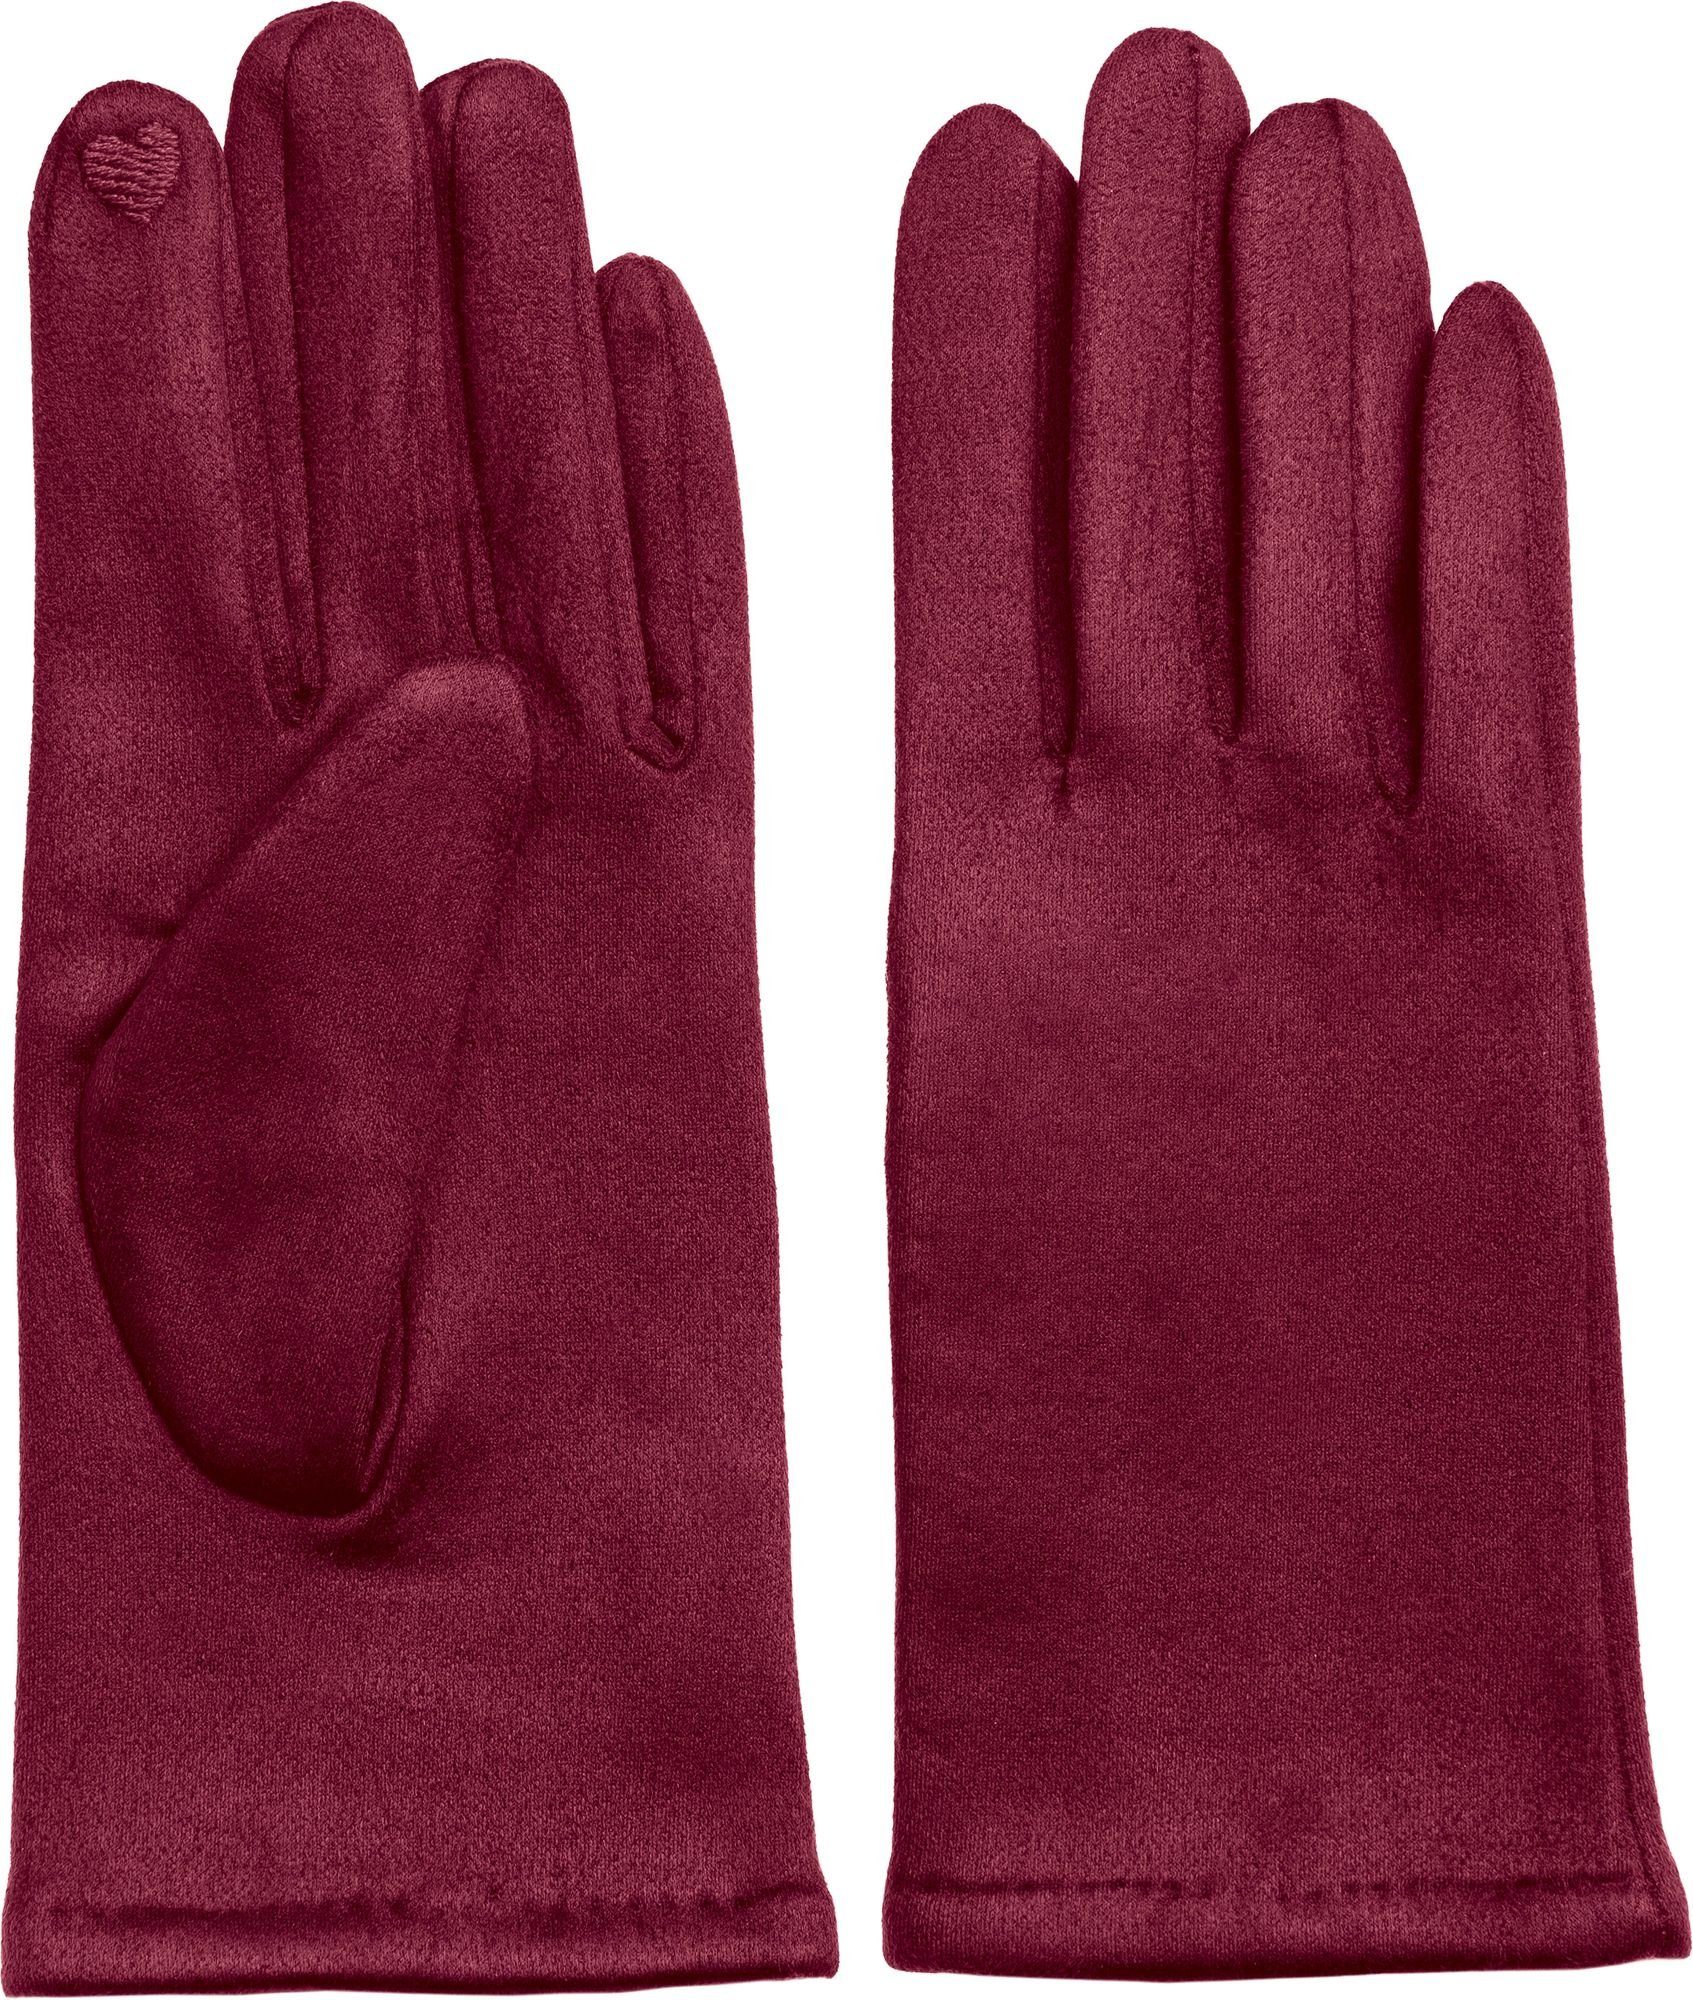 Caspar Strickhandschuhe GLV013 klassisch elegante uni Damen Winter Handschuhe weinrot